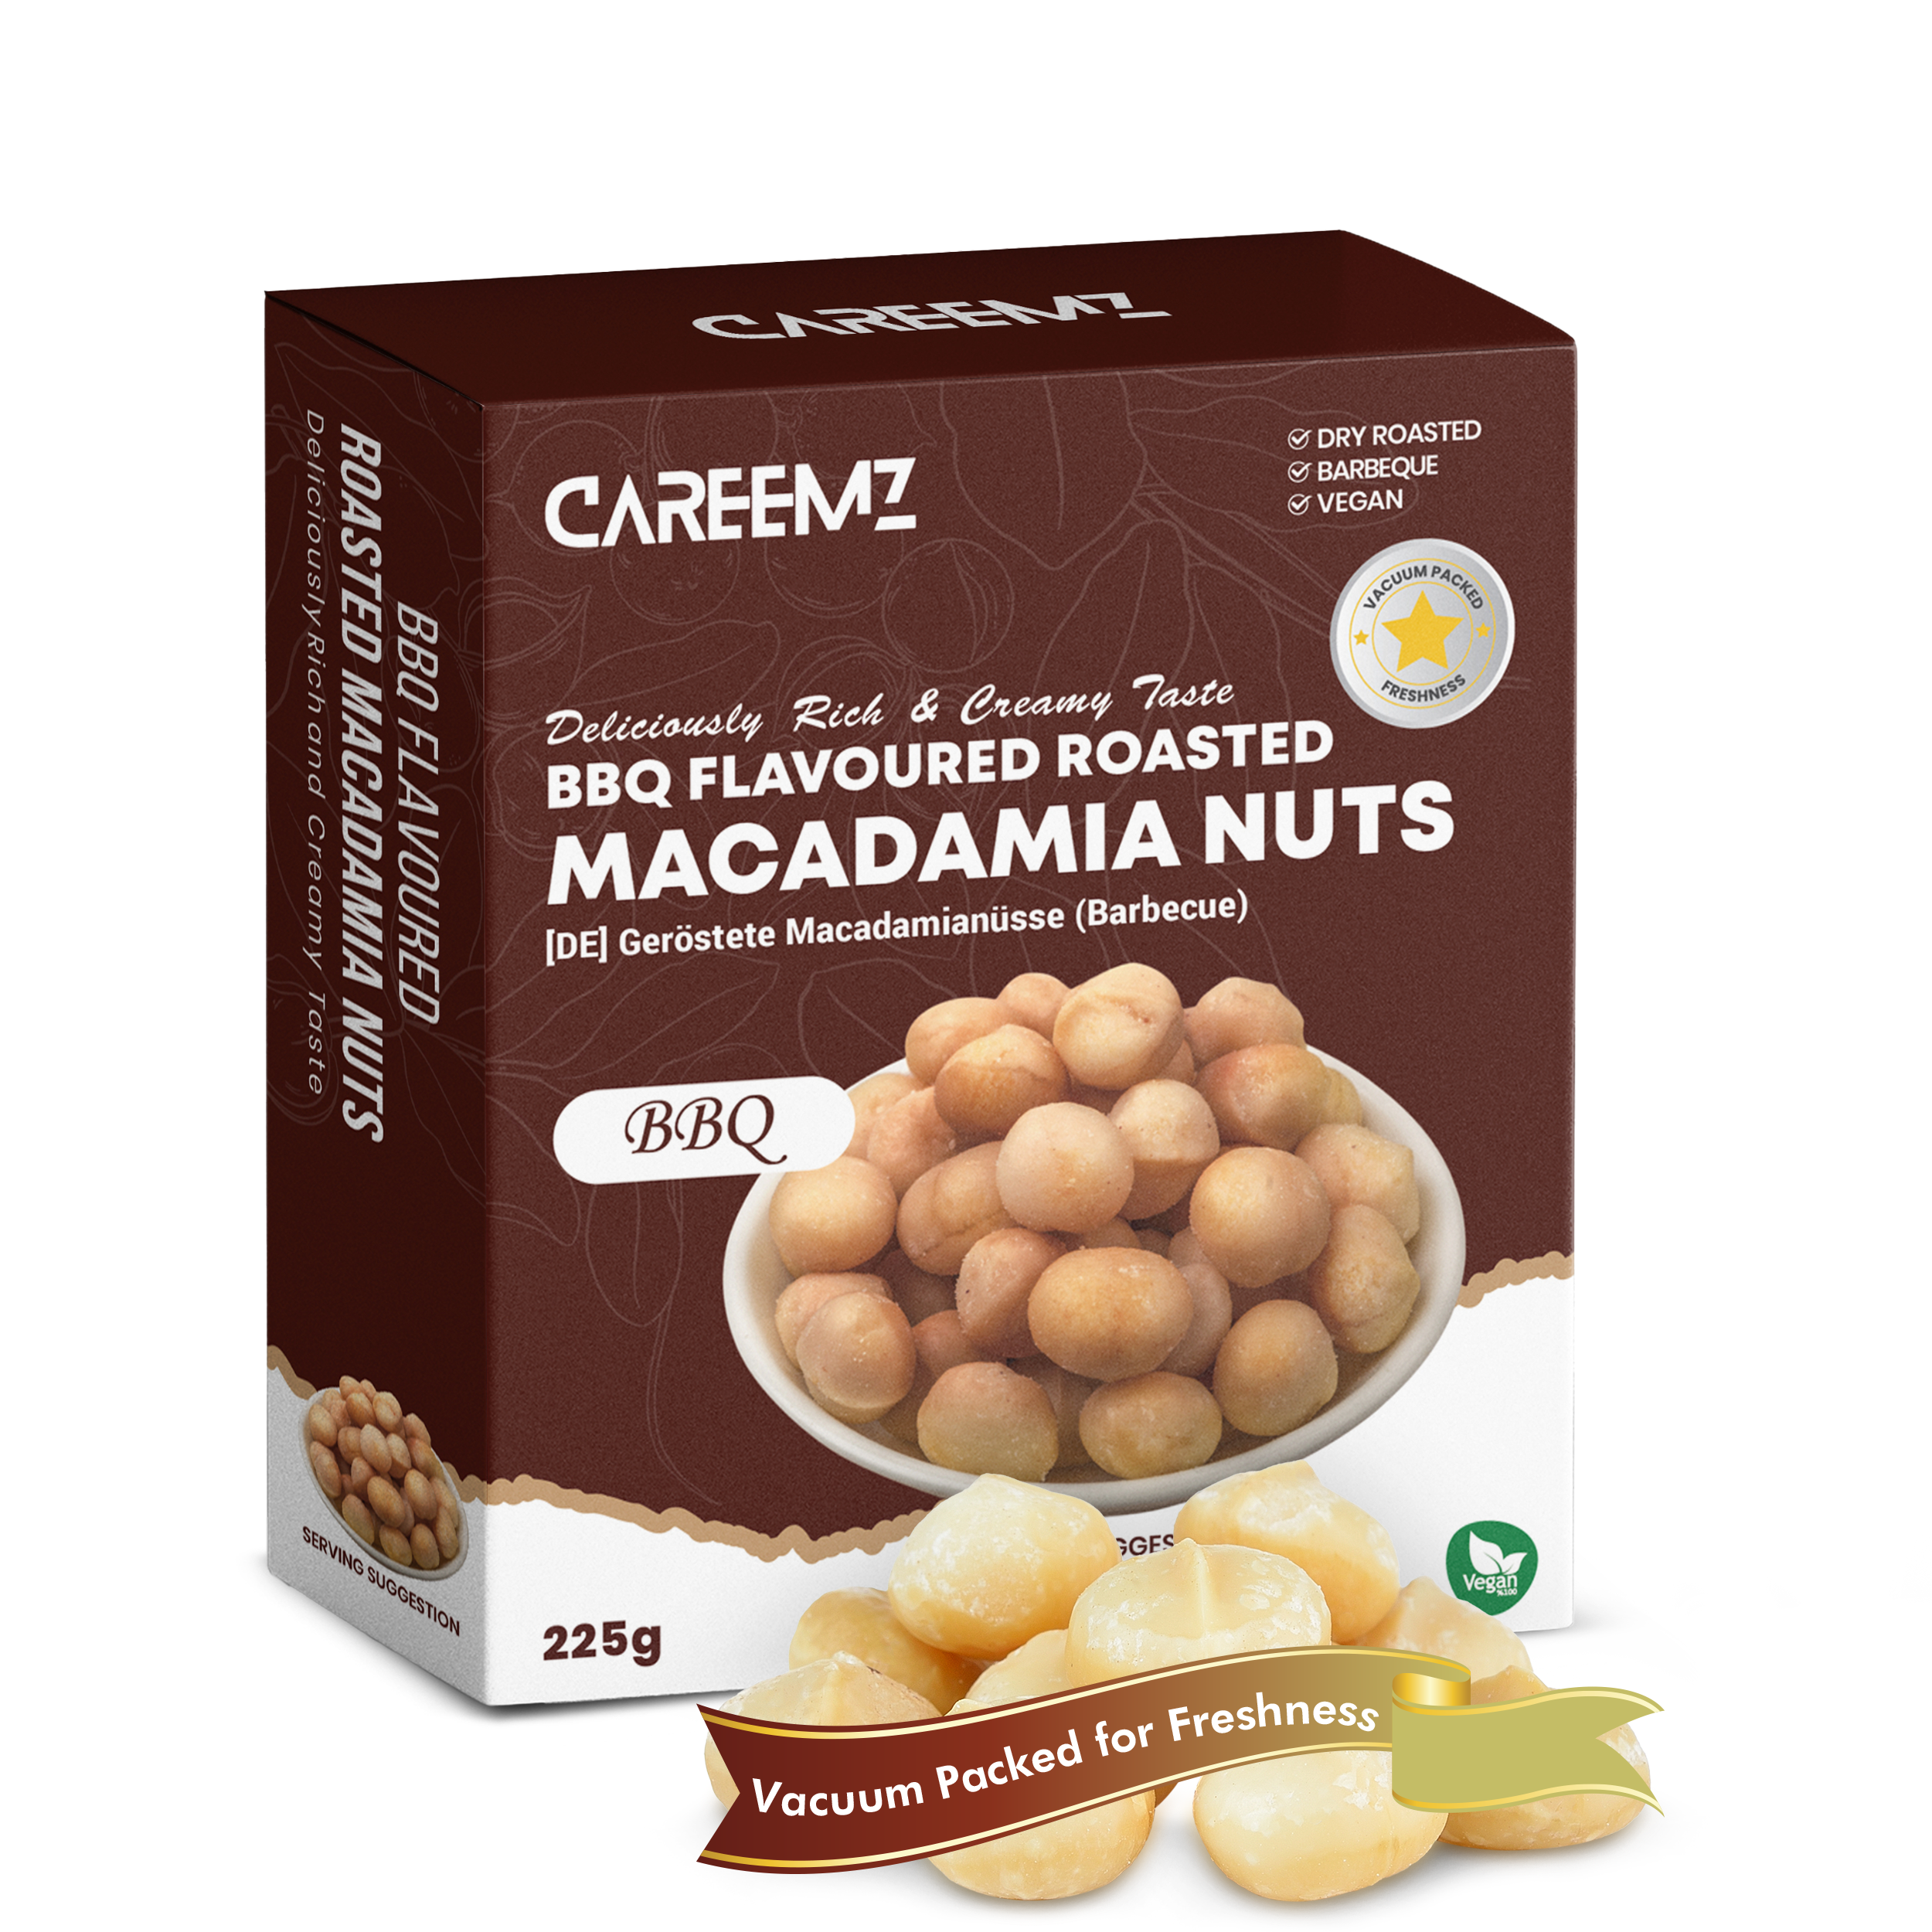 CAREEMZ Roasted Barbecue (BBQ) Flavored Macadamia Nuts